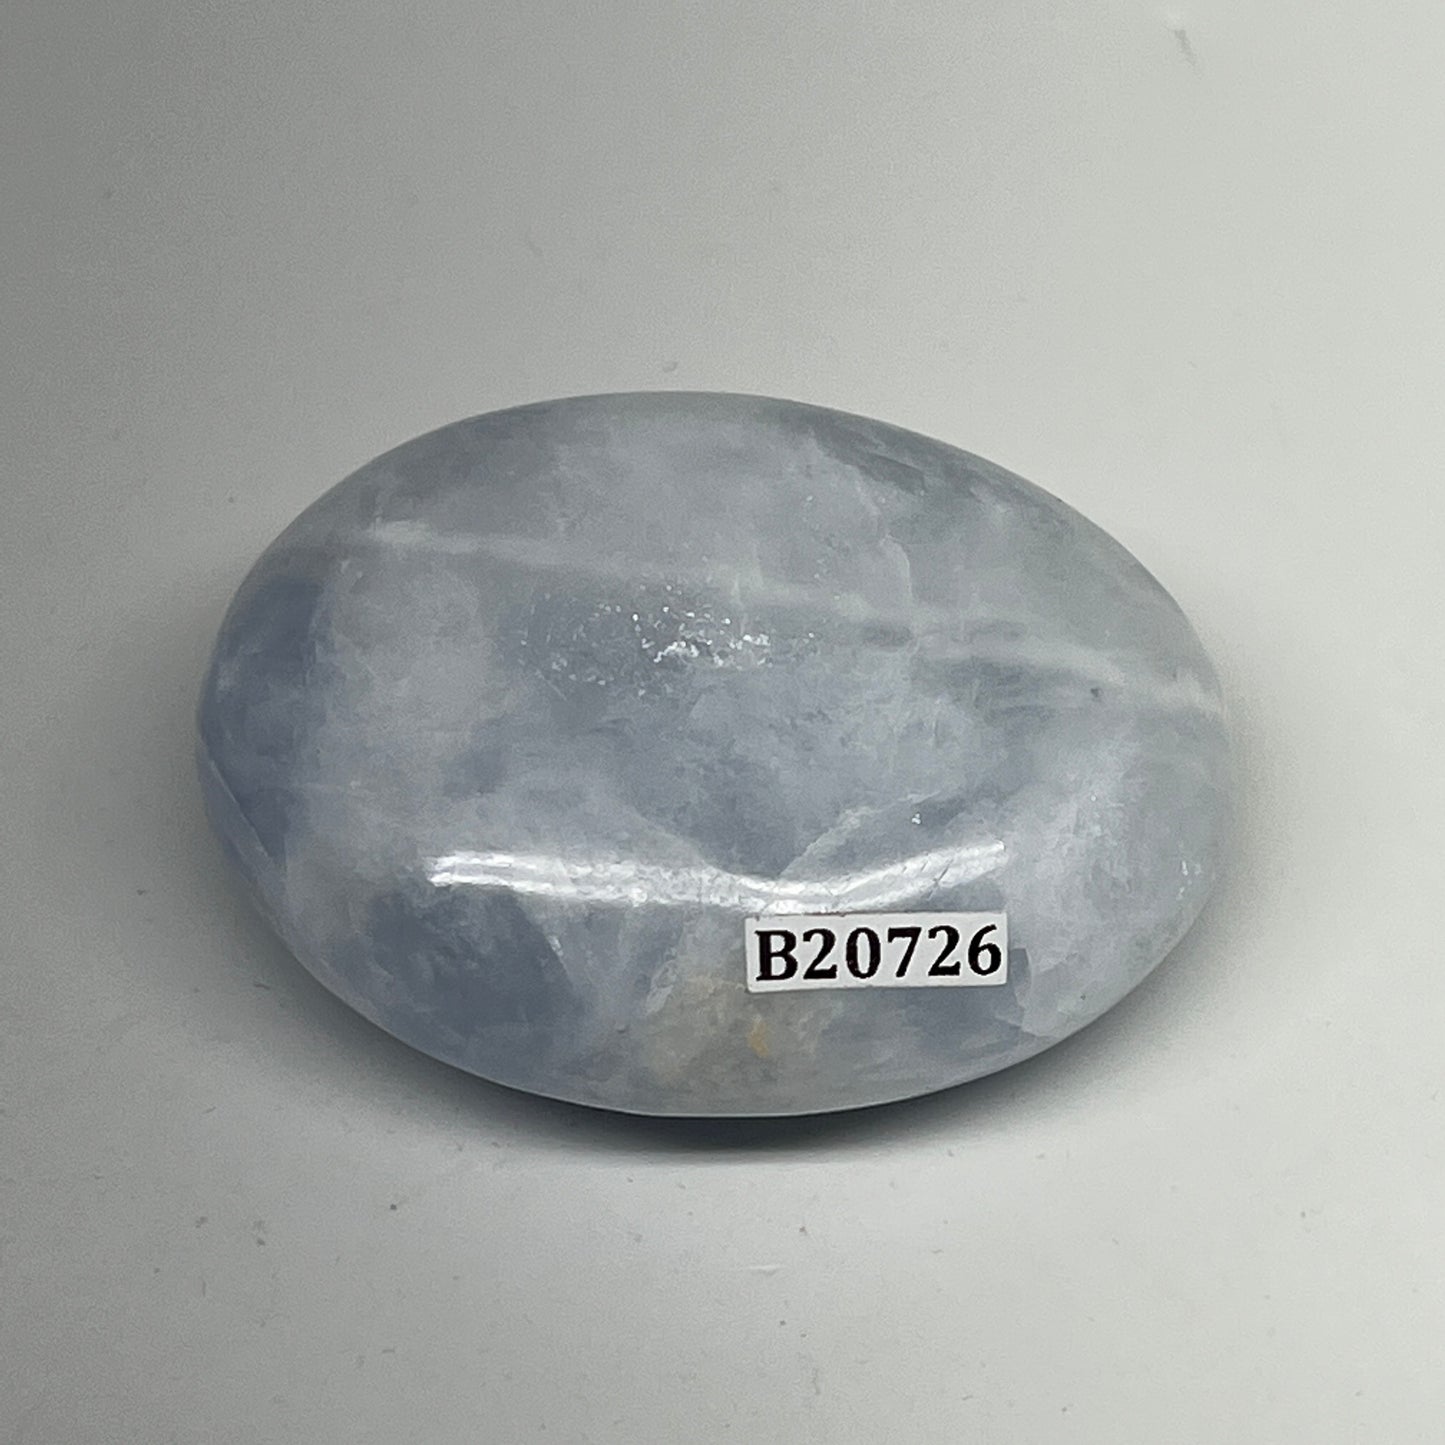 111g, 2.4"x1.9"x1" Blue Calcite Small Palm-Stone Tumbled @Madagascar, B20726